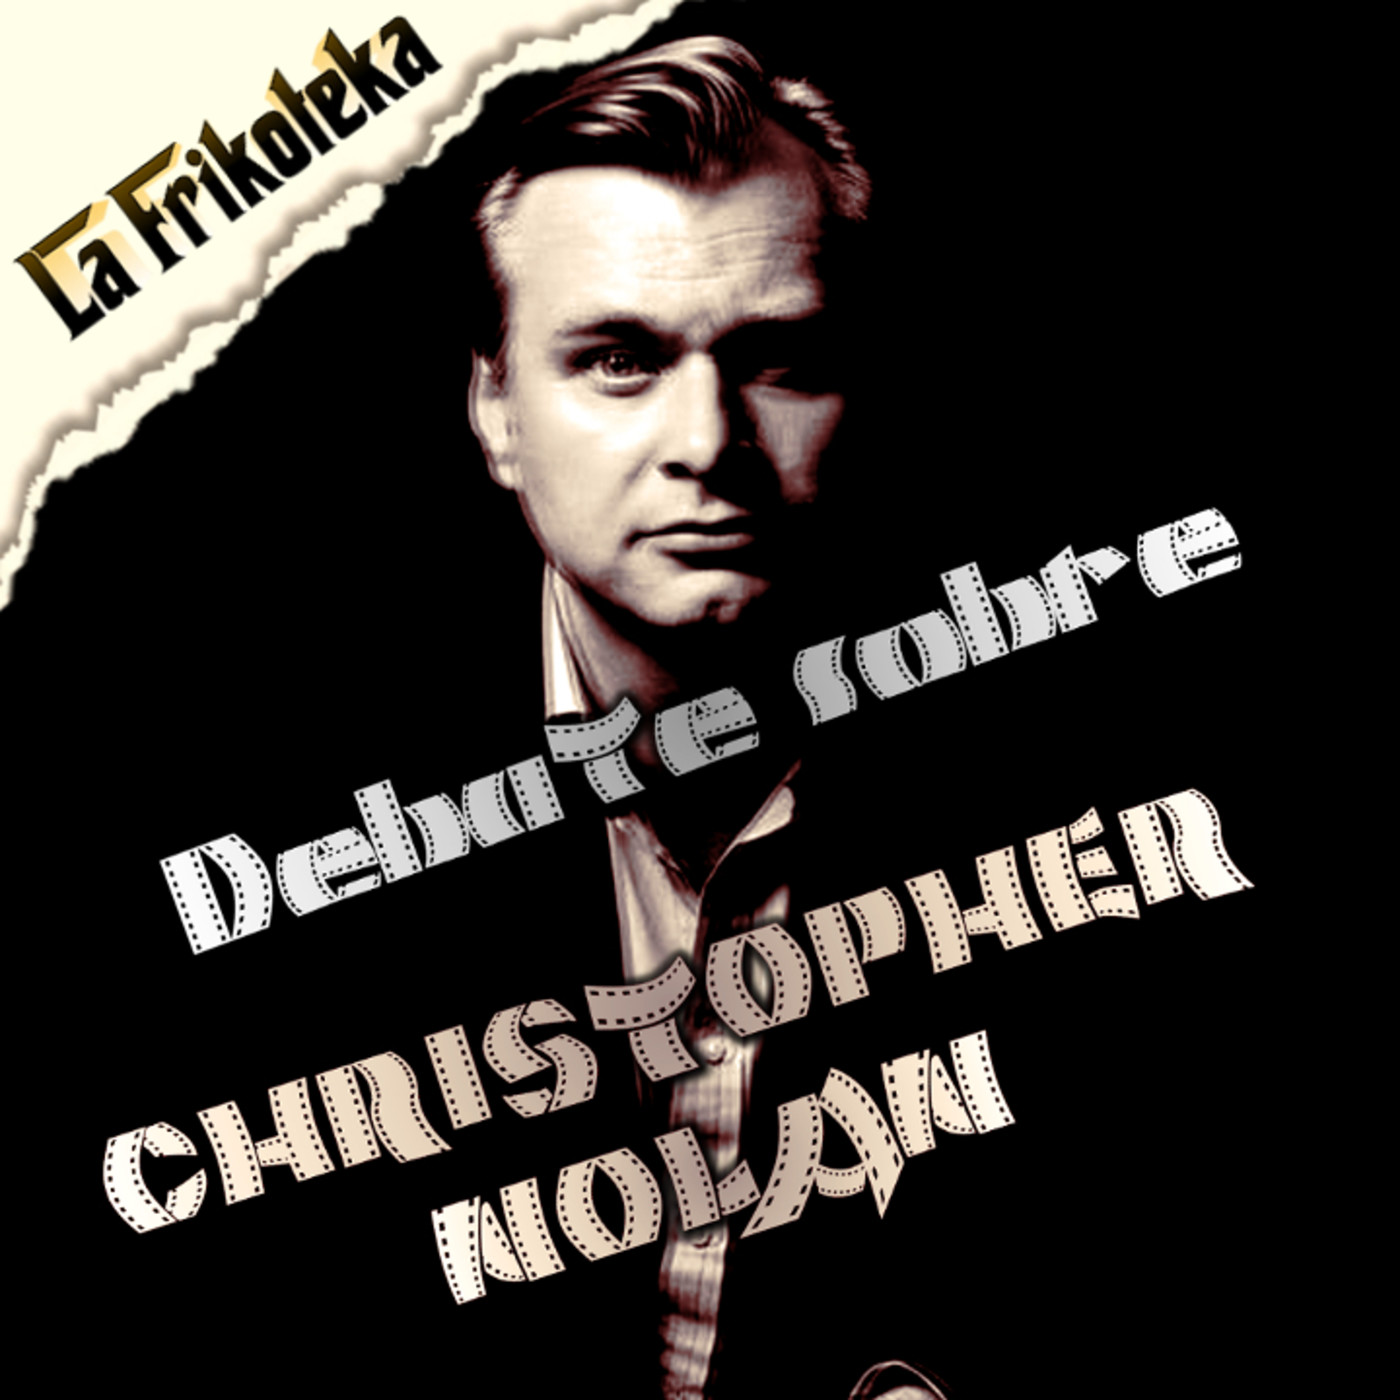 009 - DEBATE Christopher Nolan